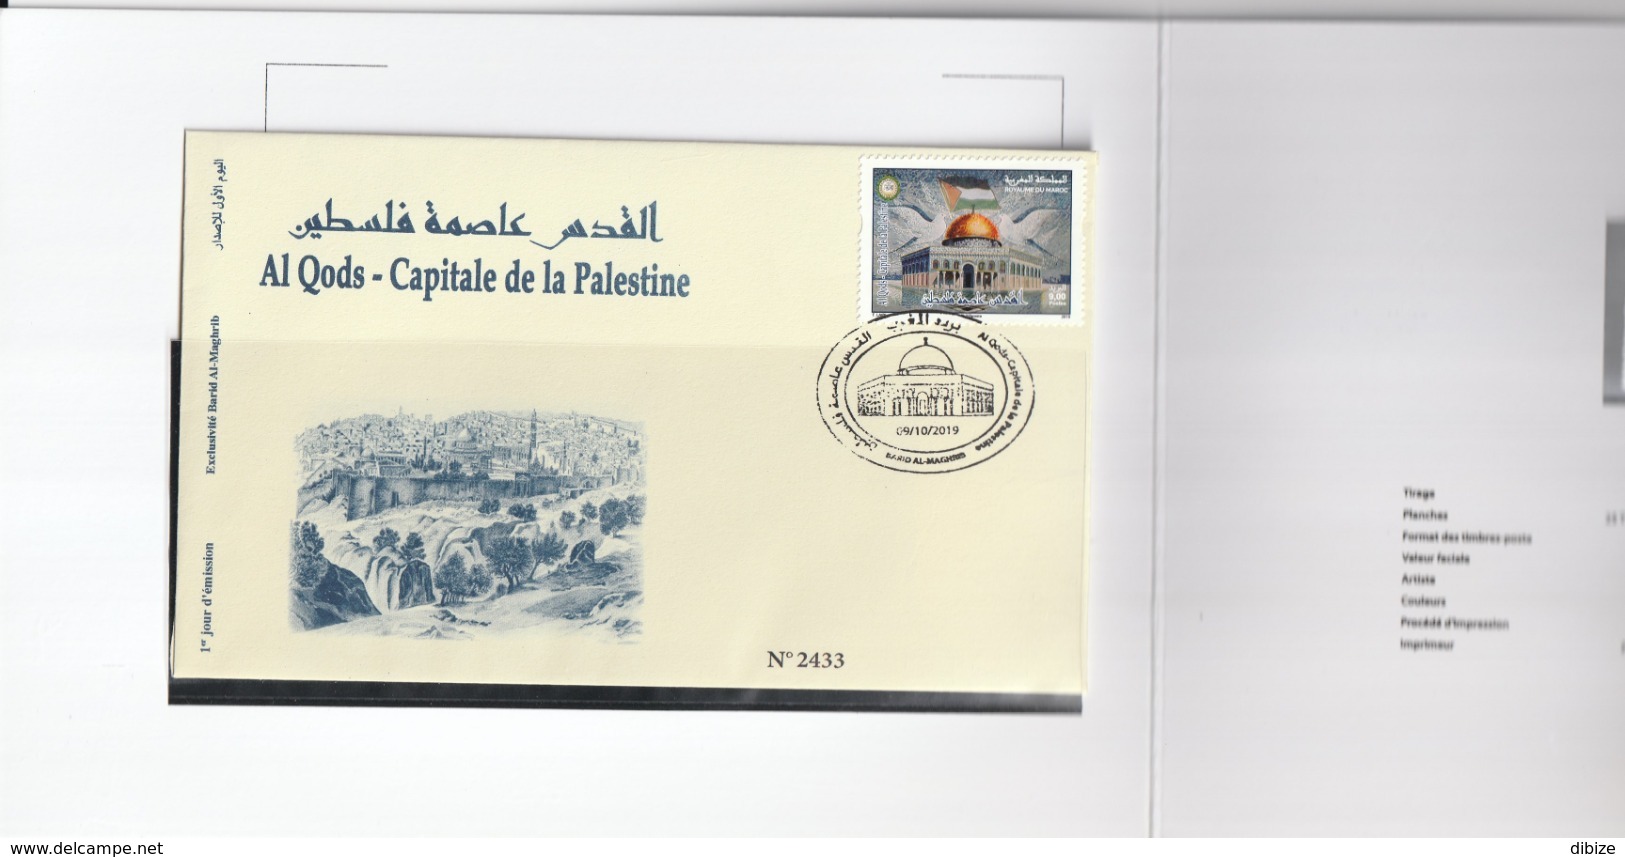 Maroc. Album FDC Et  Timbre 2019. Al Qods - Capitale De La Palestine. Cachet De Marrakech. - Marruecos (1956-...)